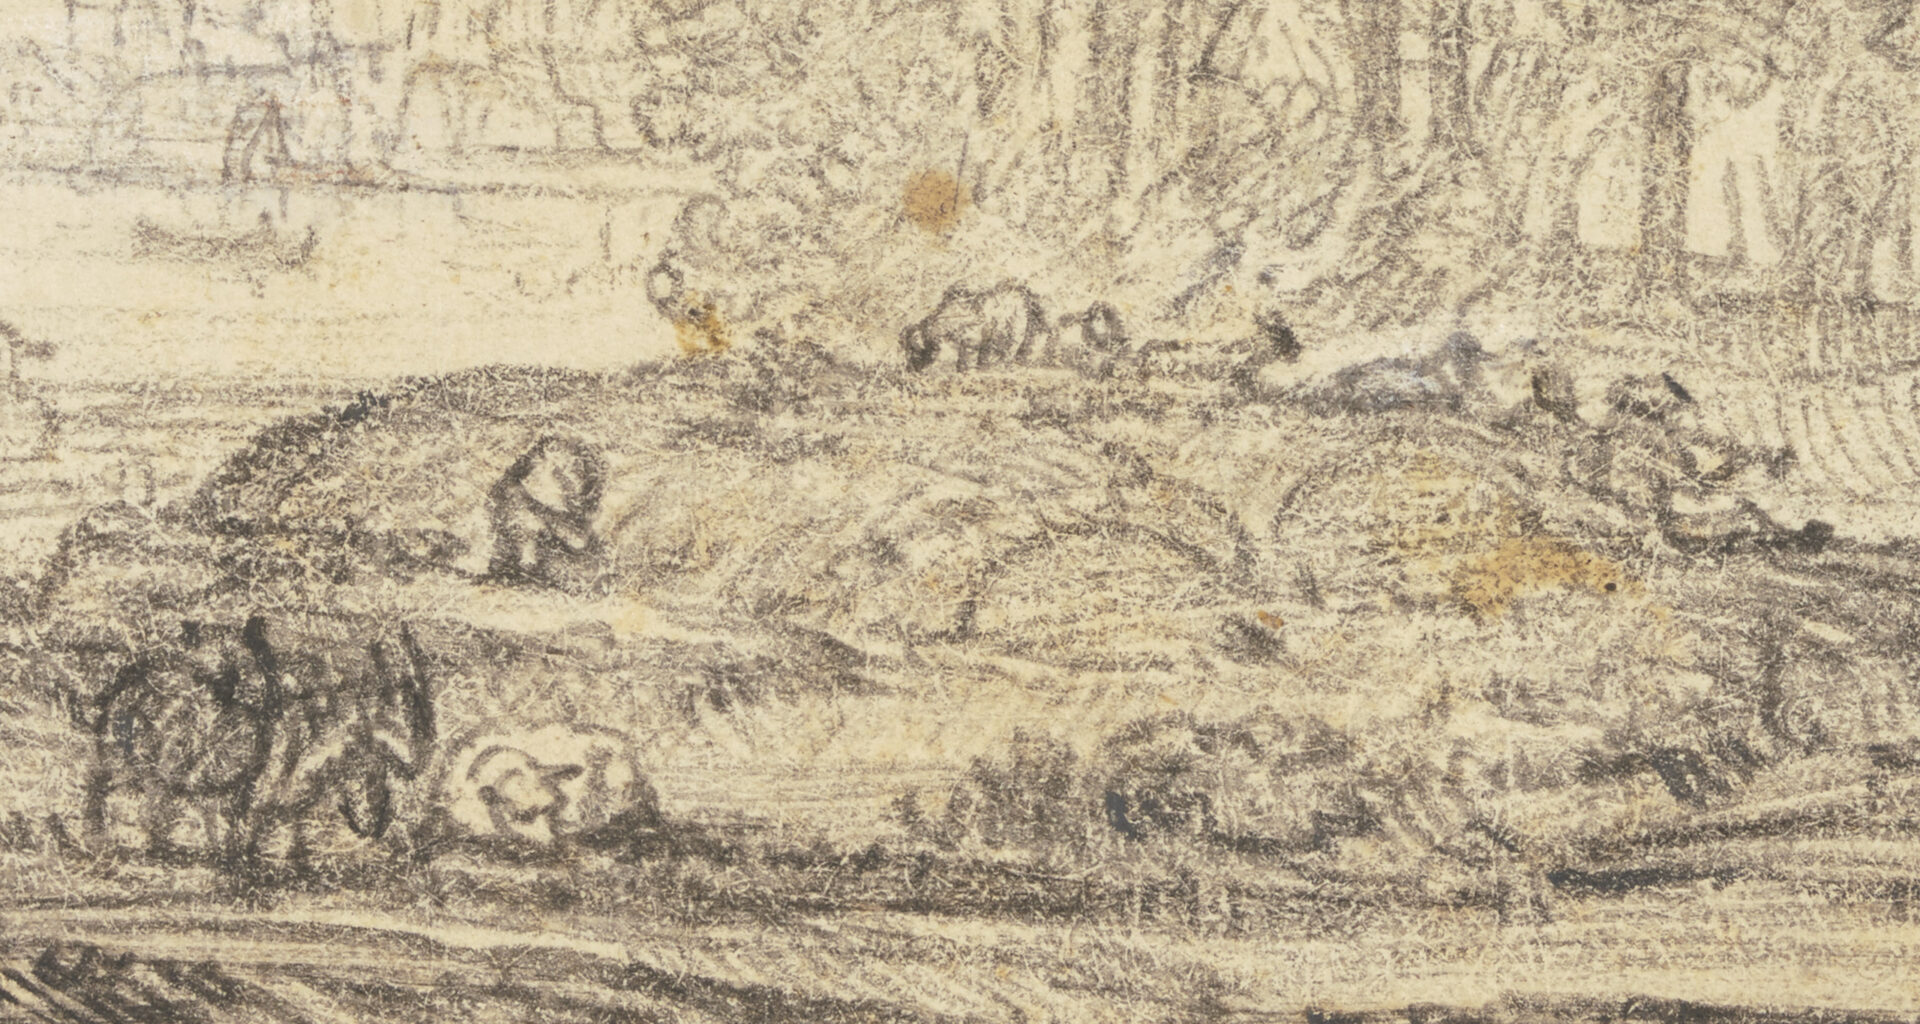 Abb. 7 Rembrandt (), Fantasielandschaft, Detail